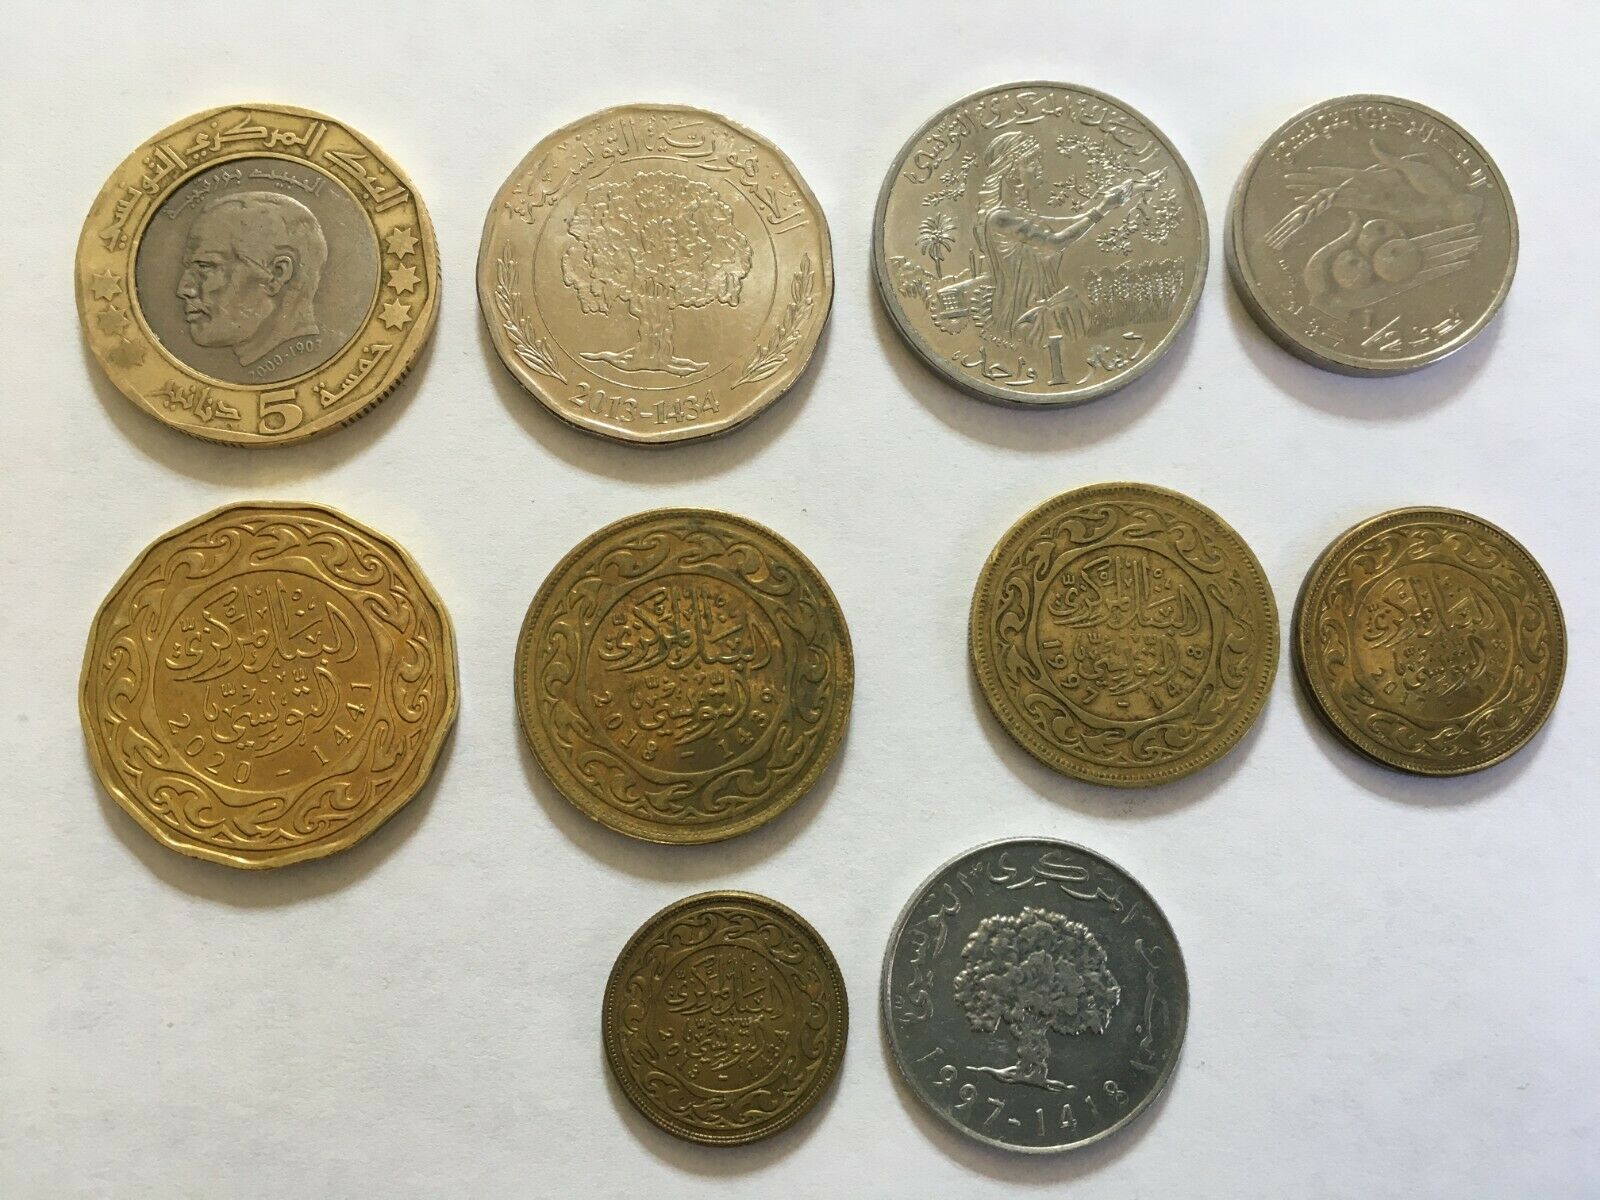 Tunisia 10 Coins 5, 2, 1, 1/2 Dinar - 200, 100, 50 - 20, 10 & 5 Millim Lot 8885